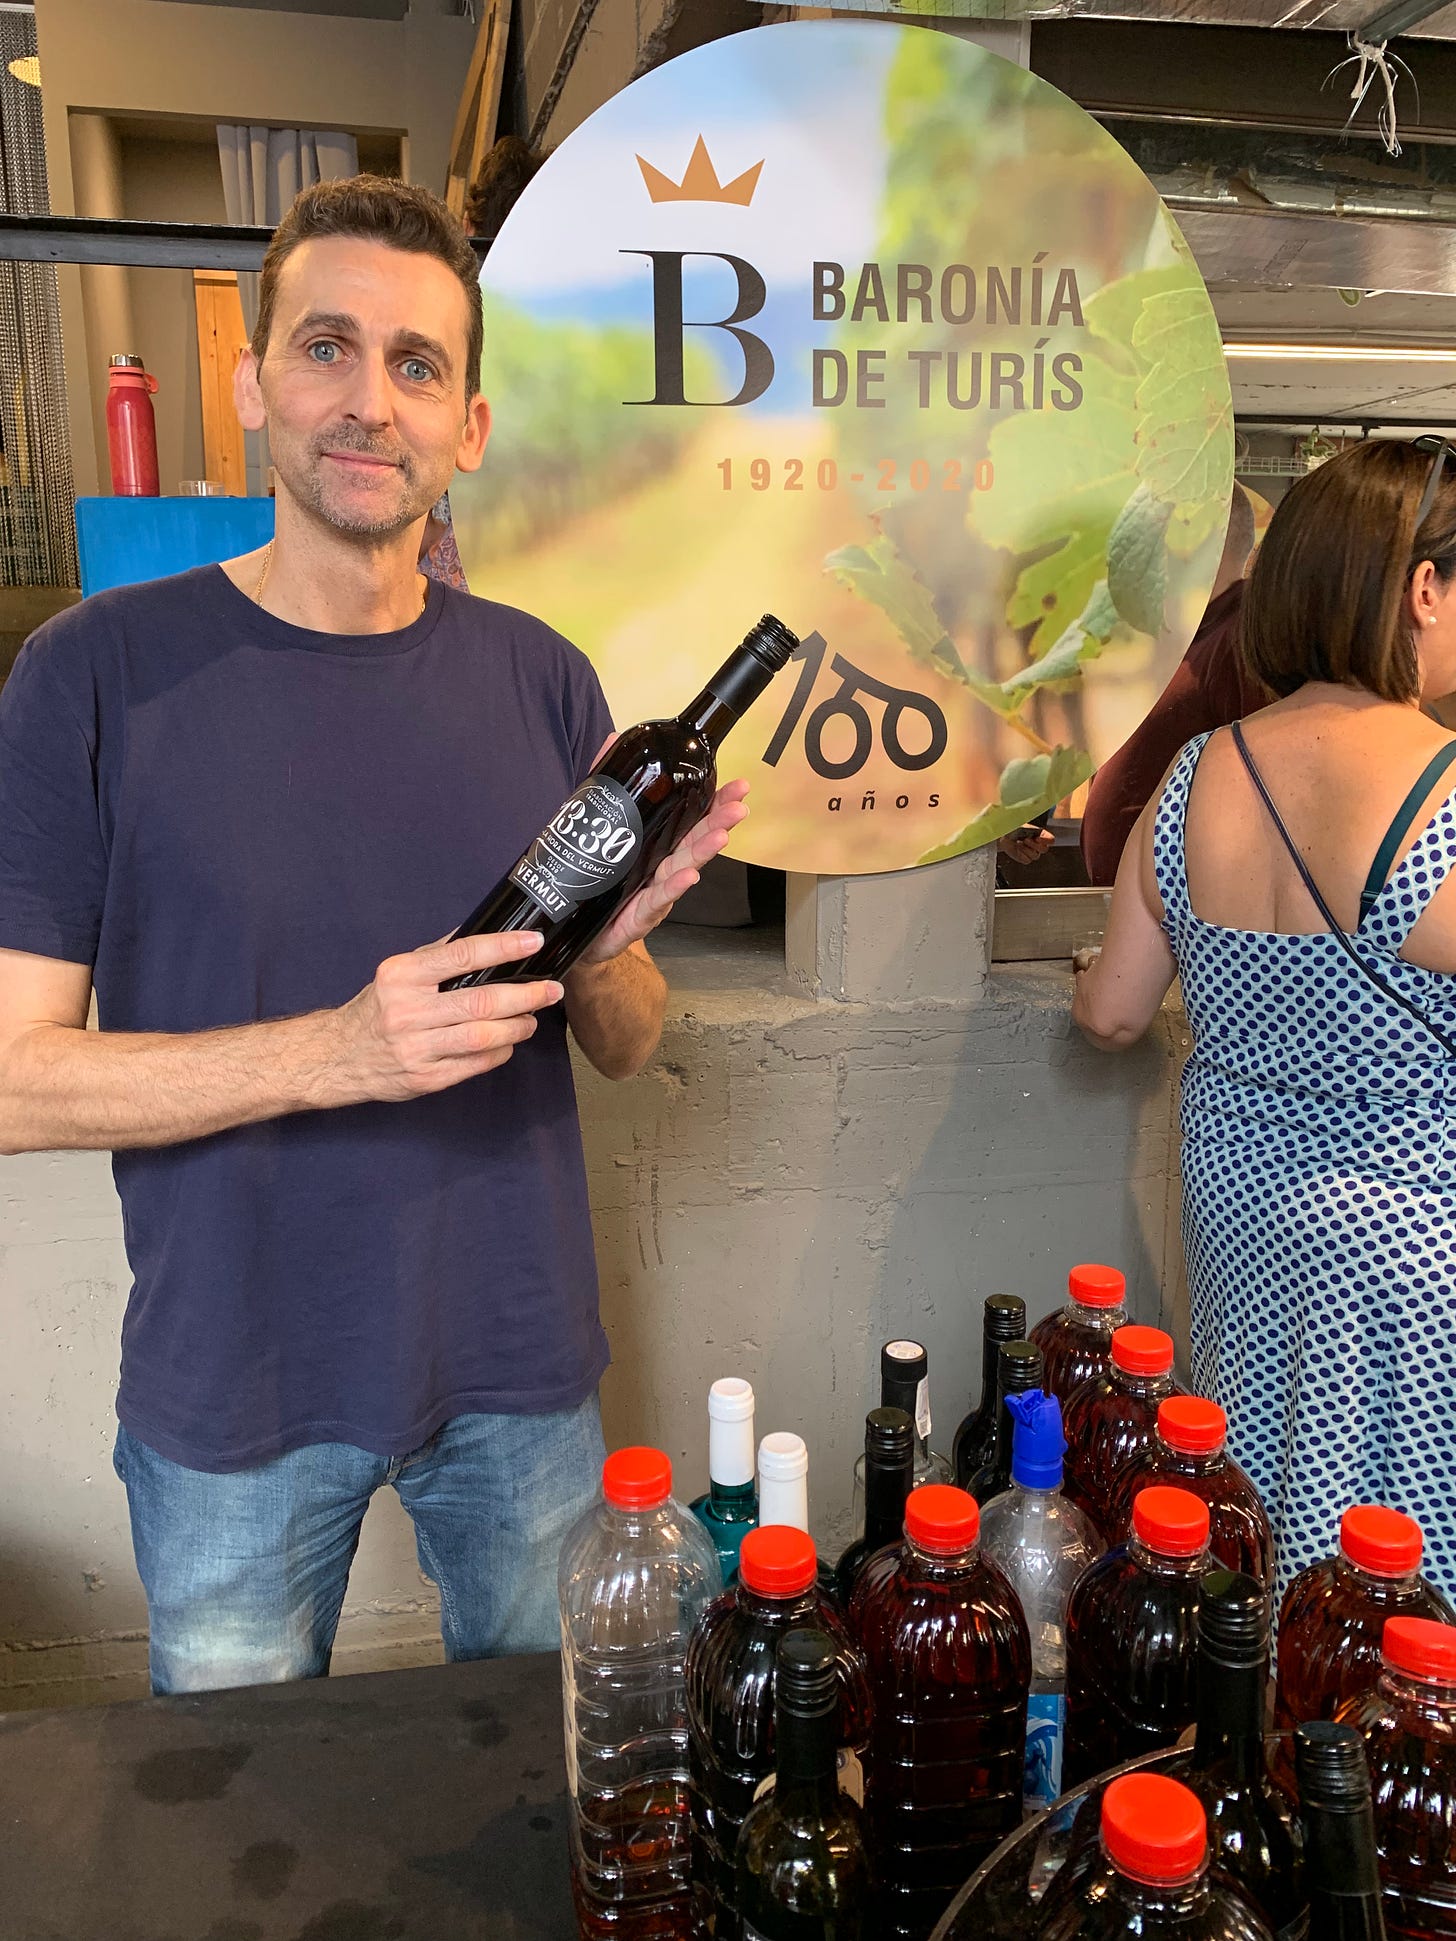 A vendor from Baronía de Turís holds a bottle of vermut.